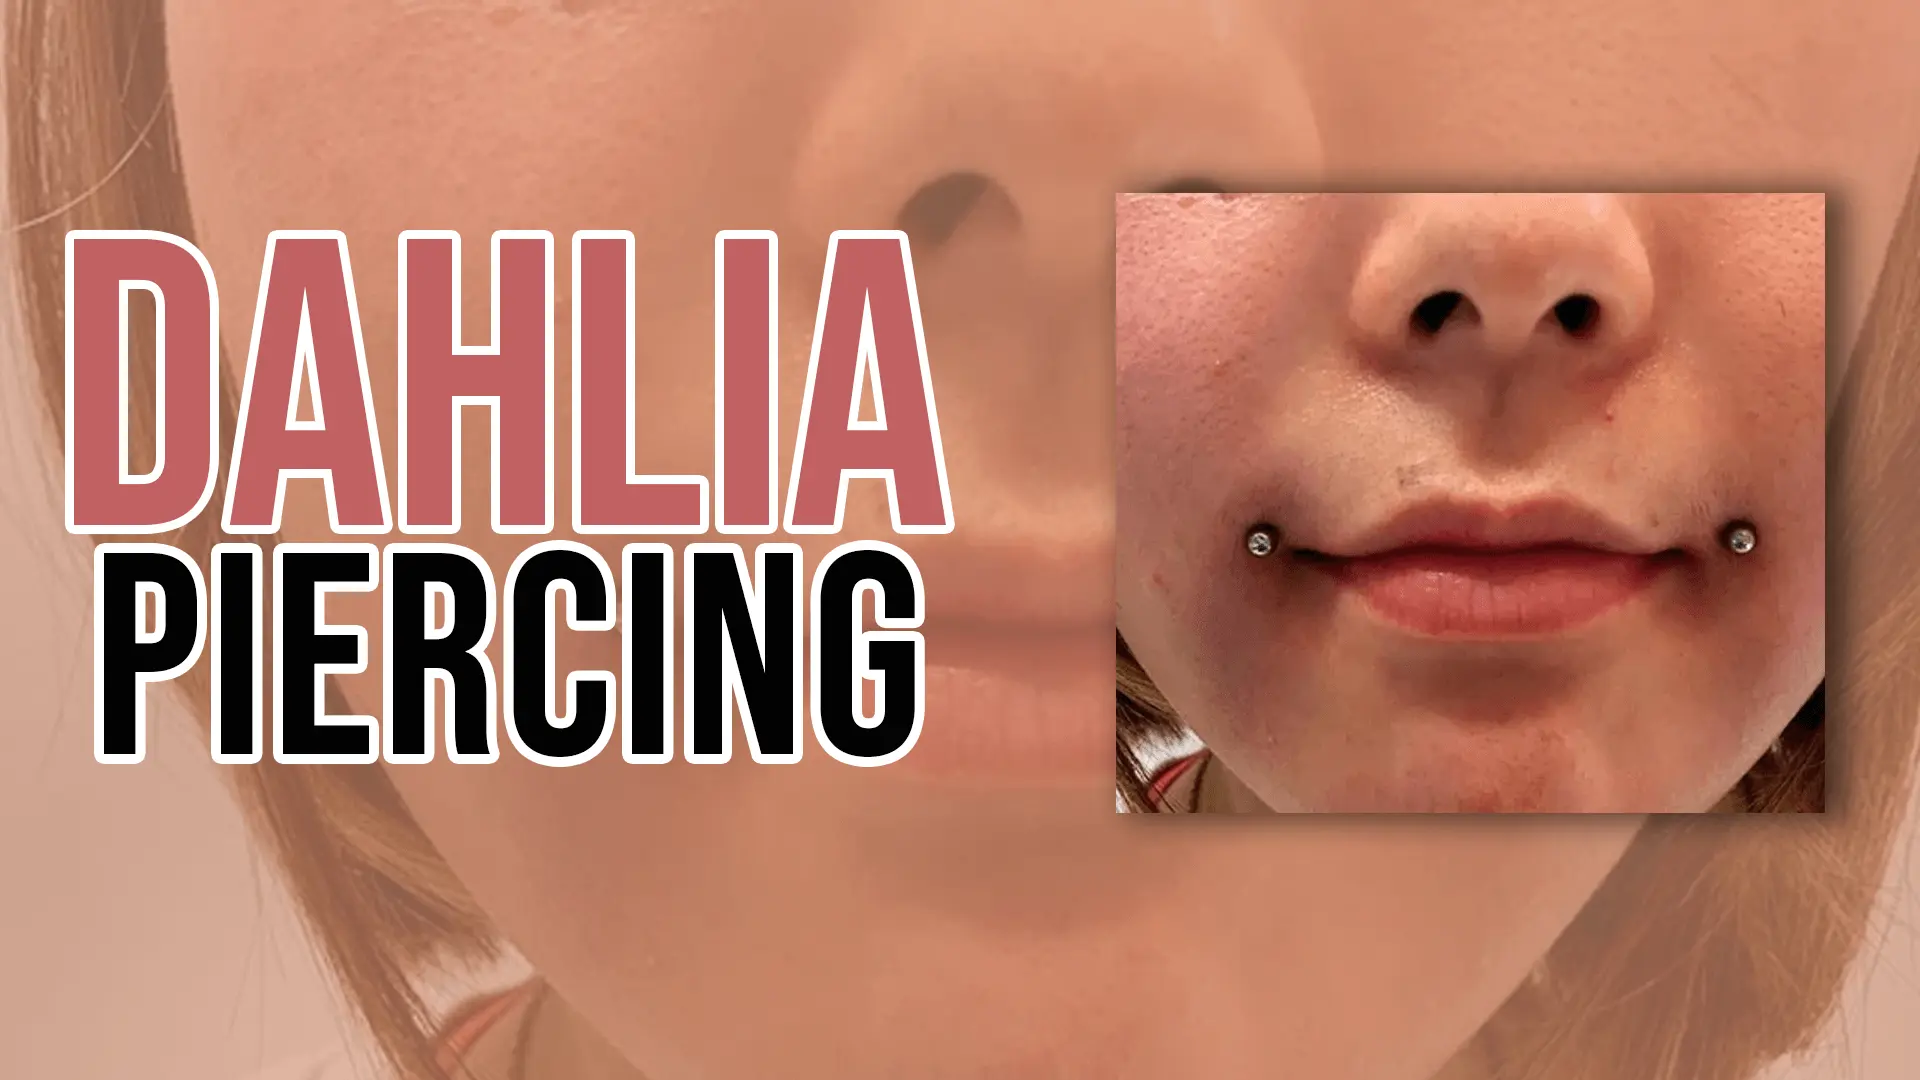 Dahlia Piercing